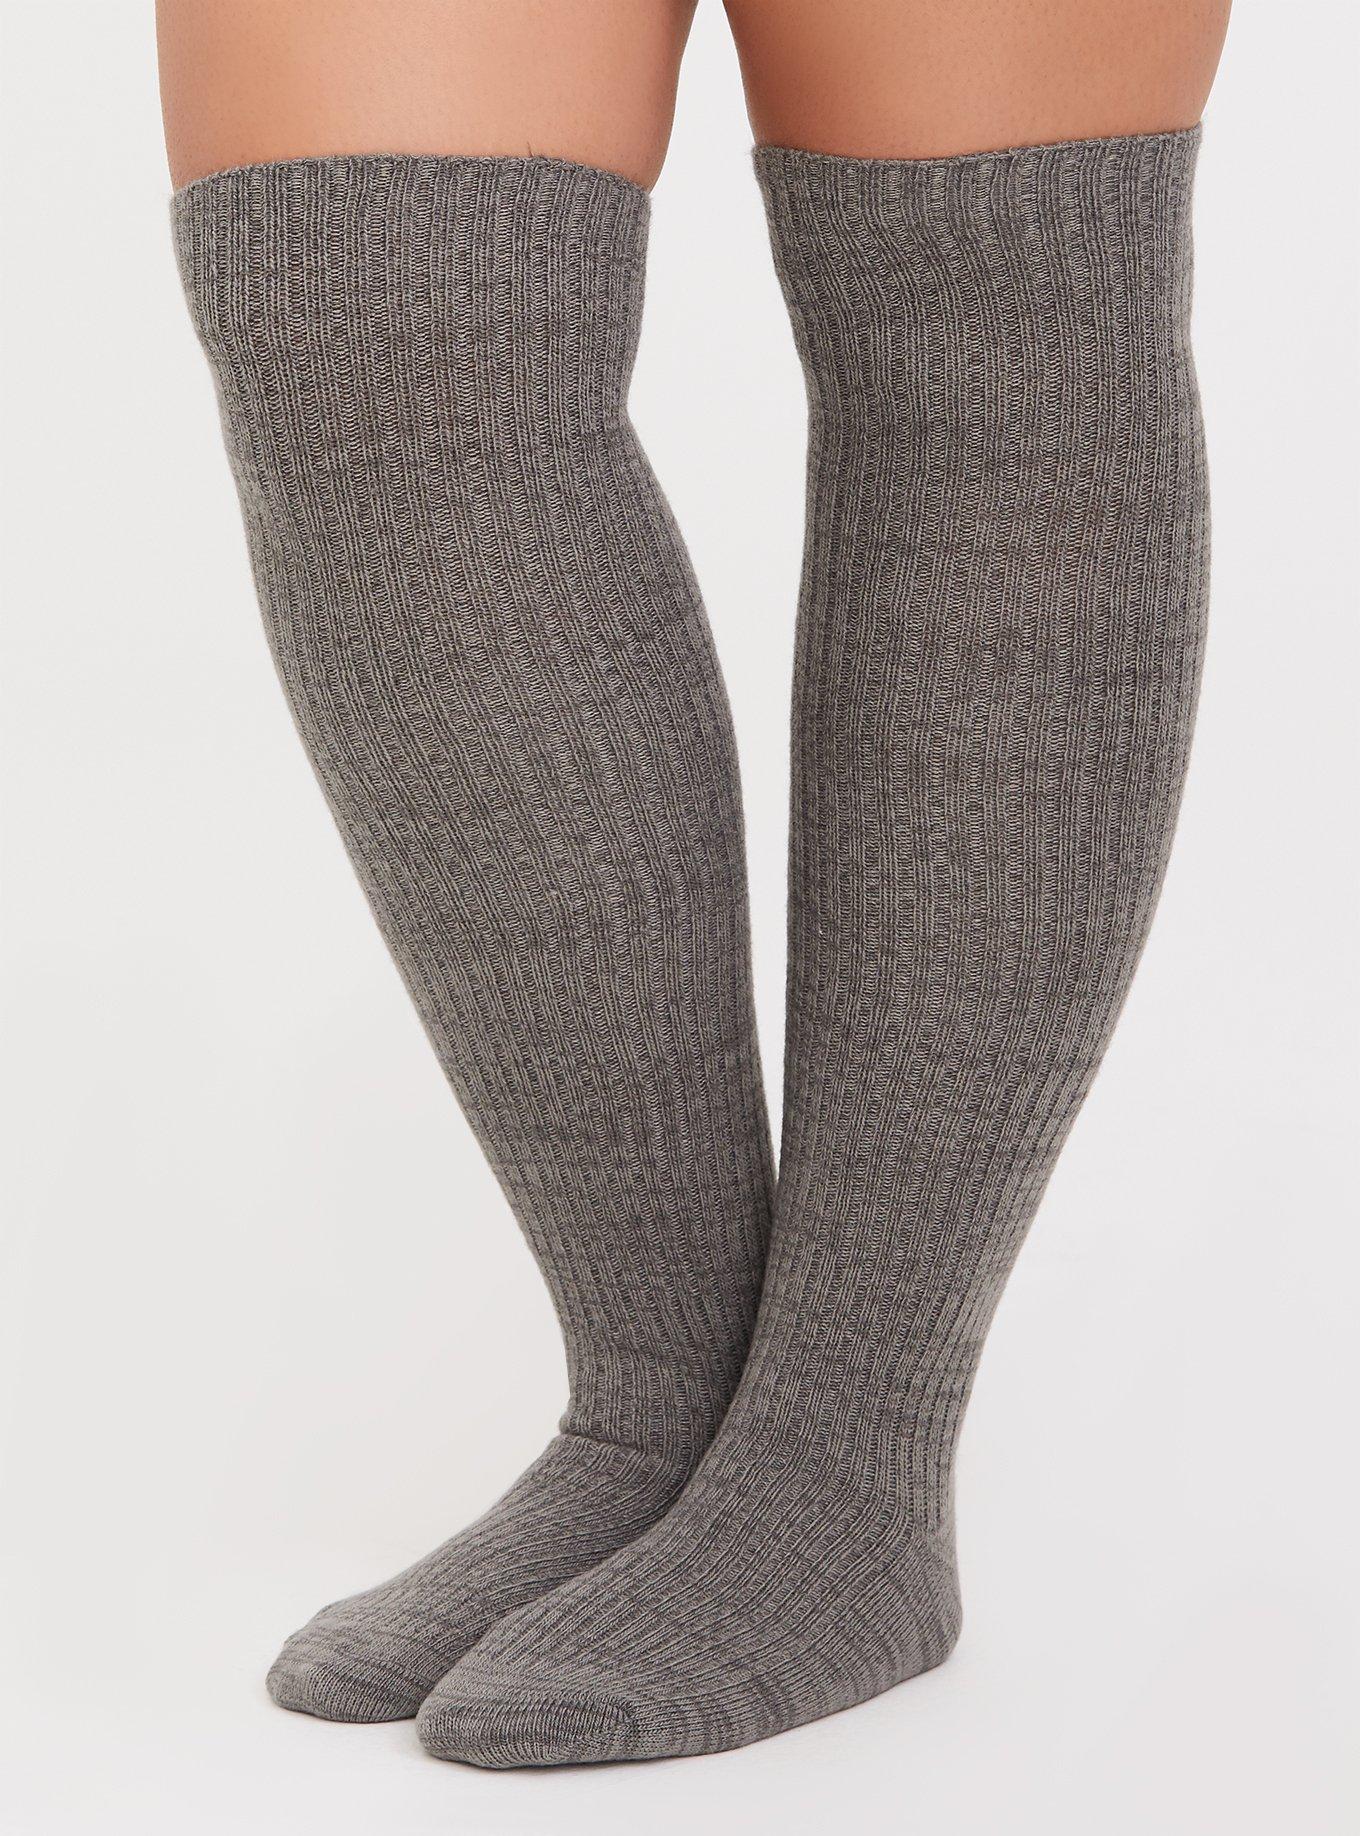 carol scheel recommends torrid knee high socks pic